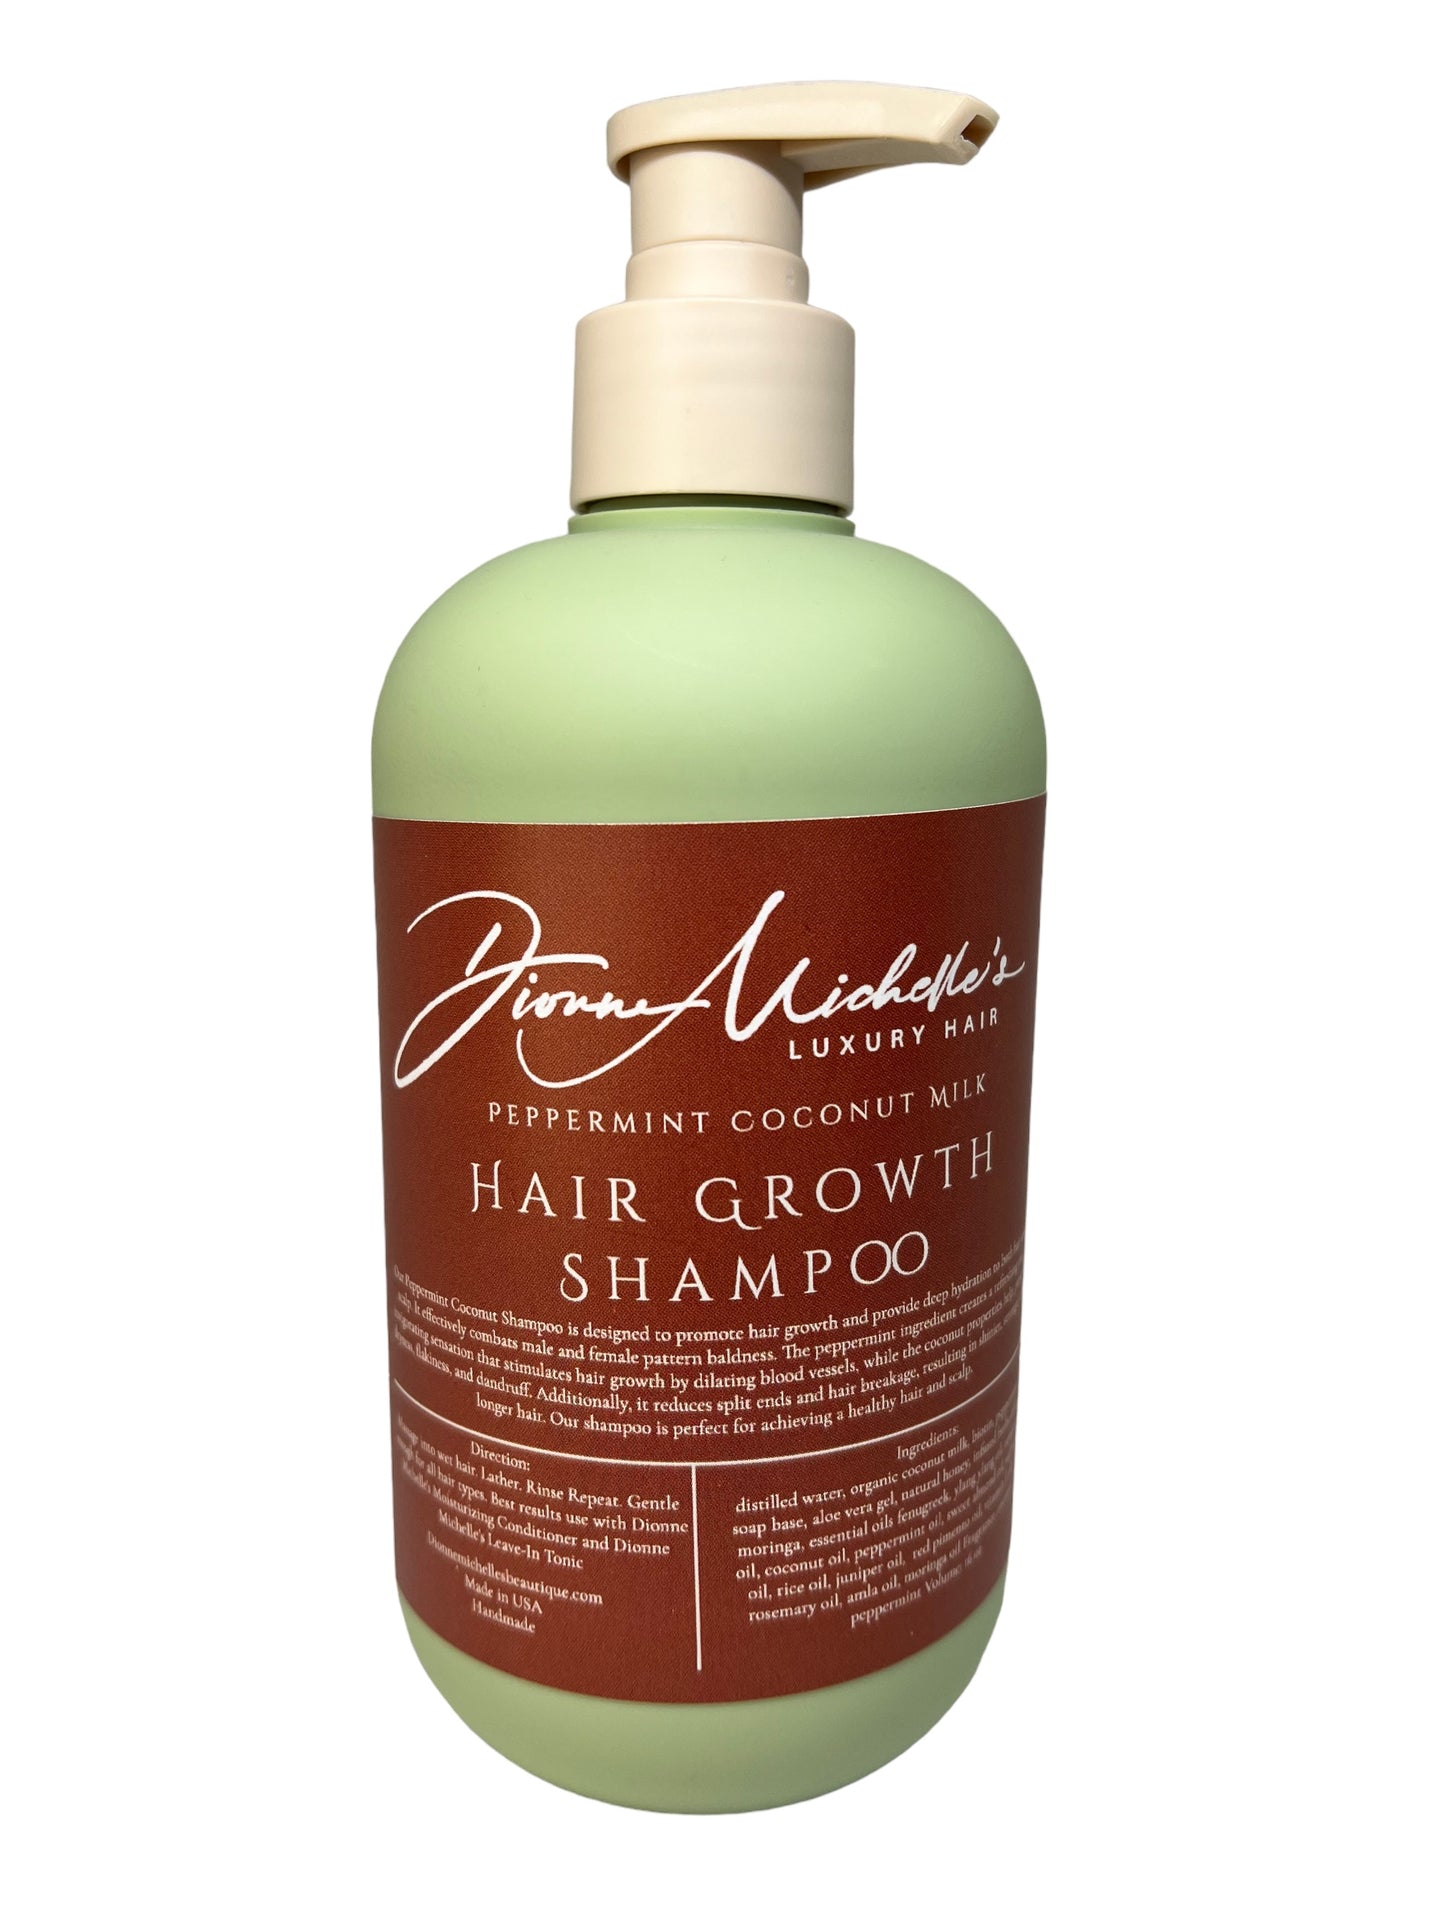 Dionne Michelle's Luxury Hair Peppermint Coconut Milk Hair Growth Shampoo